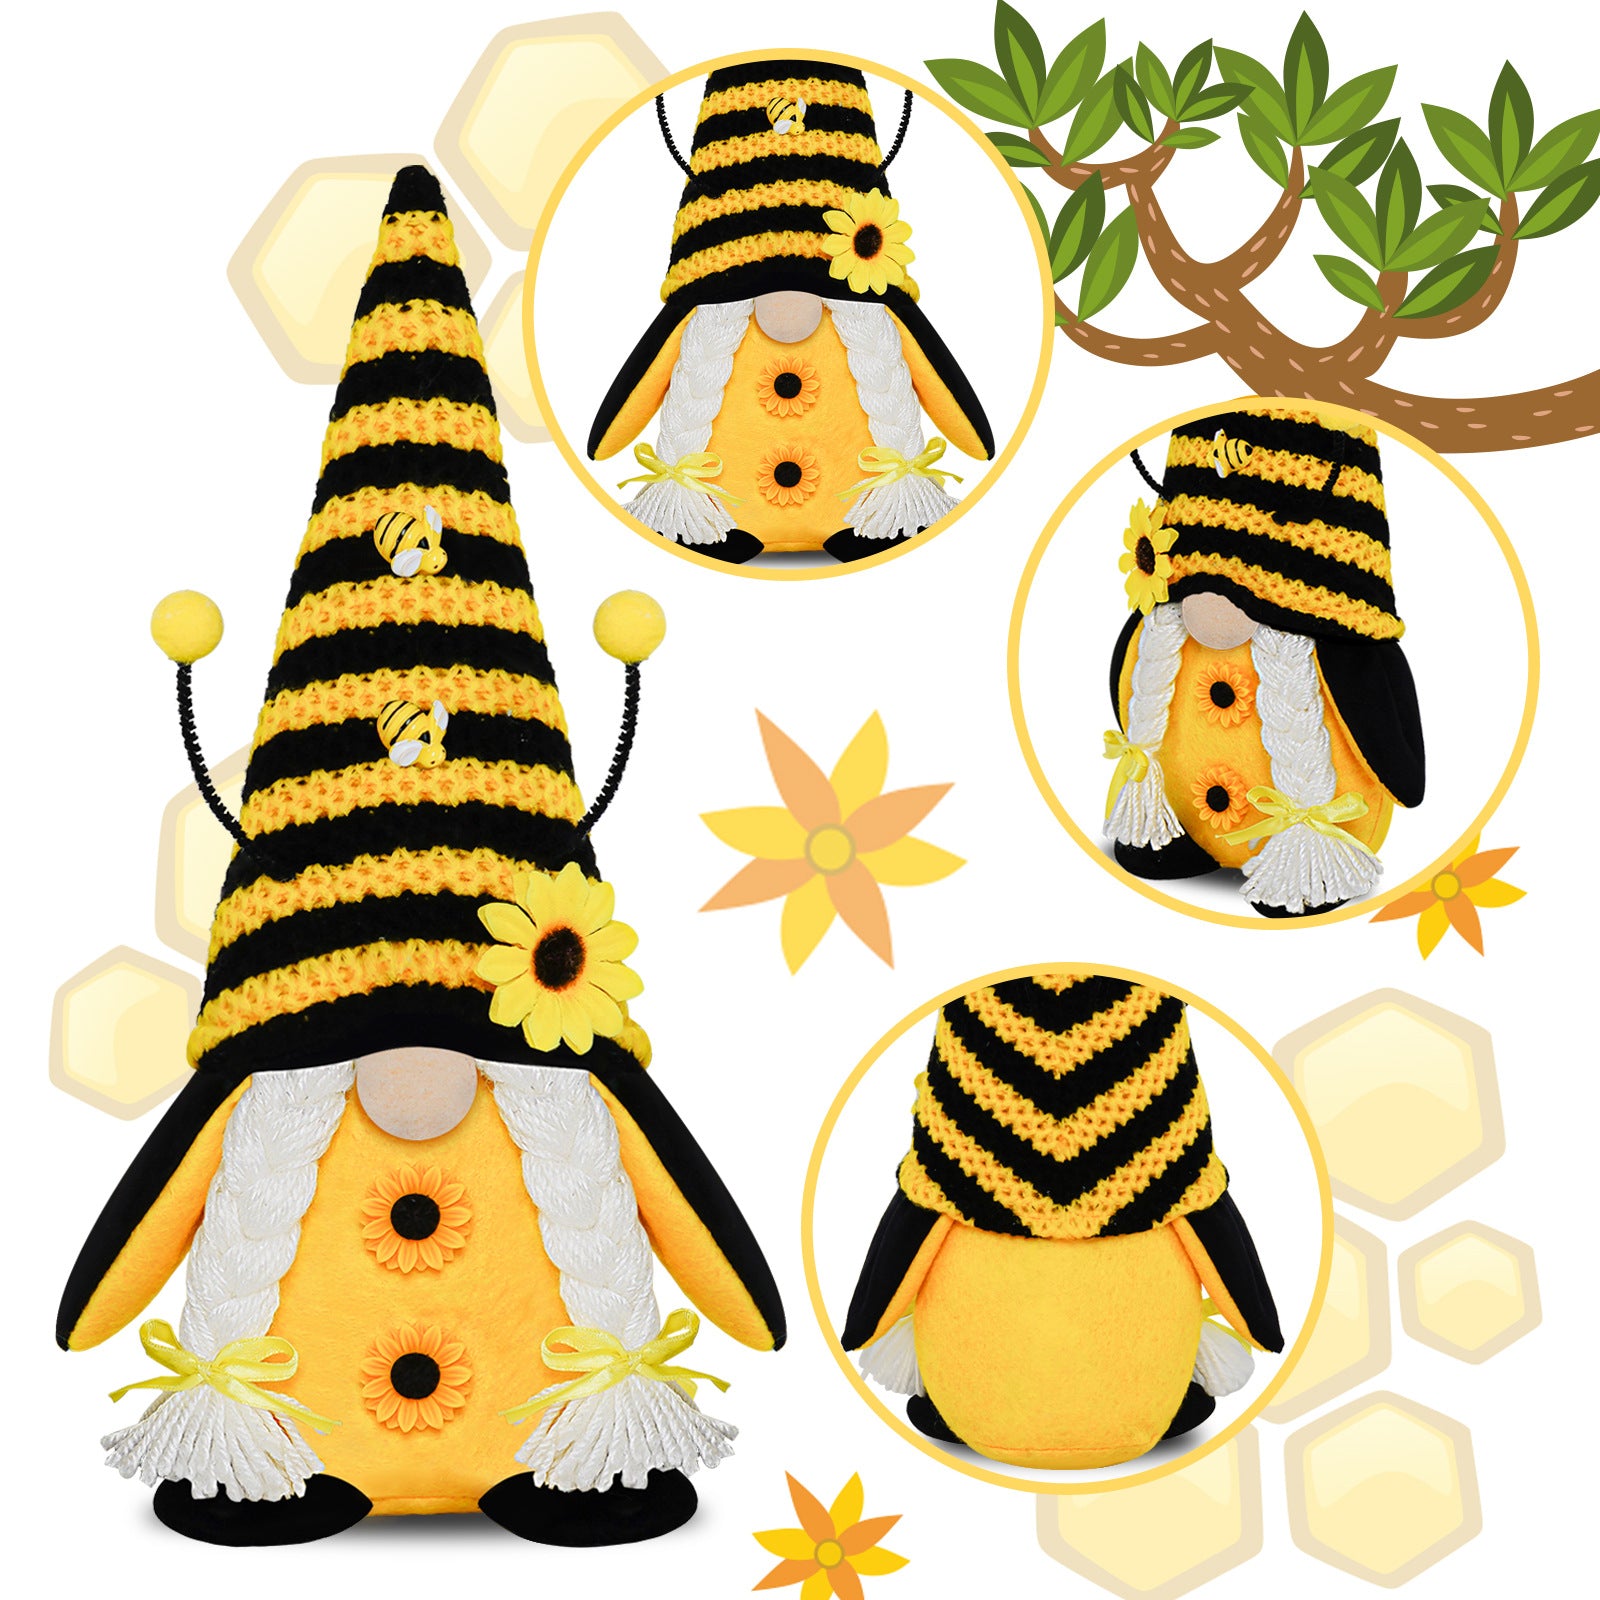 Bee gnomes, Beekeeper gnomes, Honey gnomes, Bumblebee gnomes, Beehive gnomes, Pollen gnomes, Garden gnomes, Spring gnomes, Flower gnomes, Nature gnomes, Decorative gnomes, Rustic gnomes, Festive gnomes, Yellow and black gnomes, Bee-friendly gnomes, Happy bees gnomes,